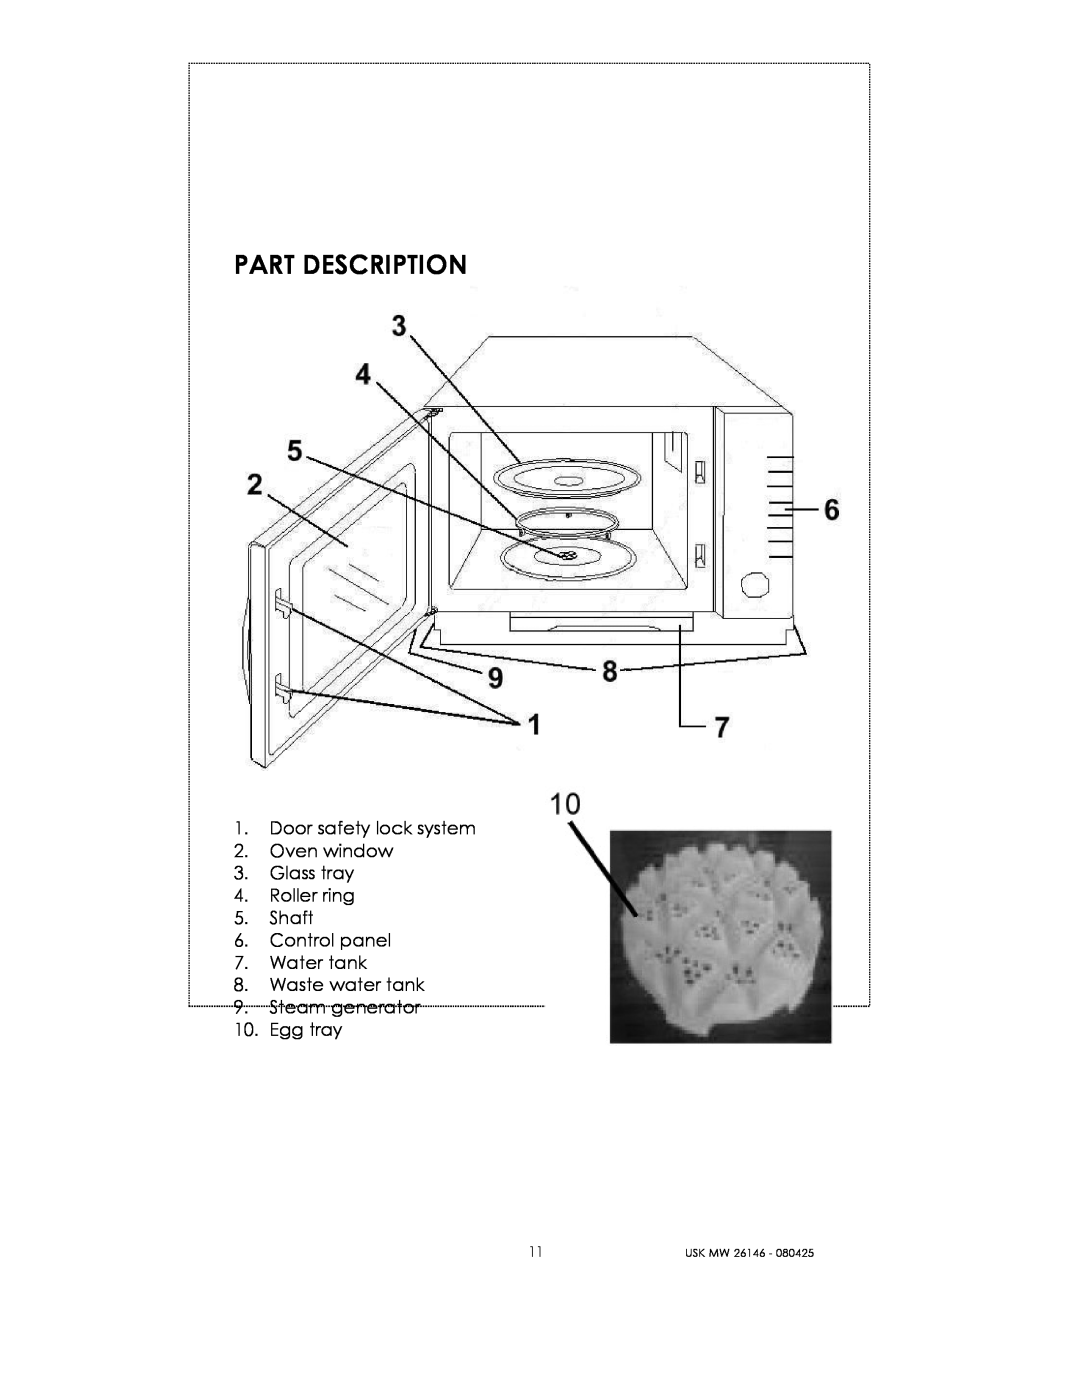 Kalorik USK MW 26146 manual Part Description, Door safety lock system 2. Oven window 3. Glass tray 